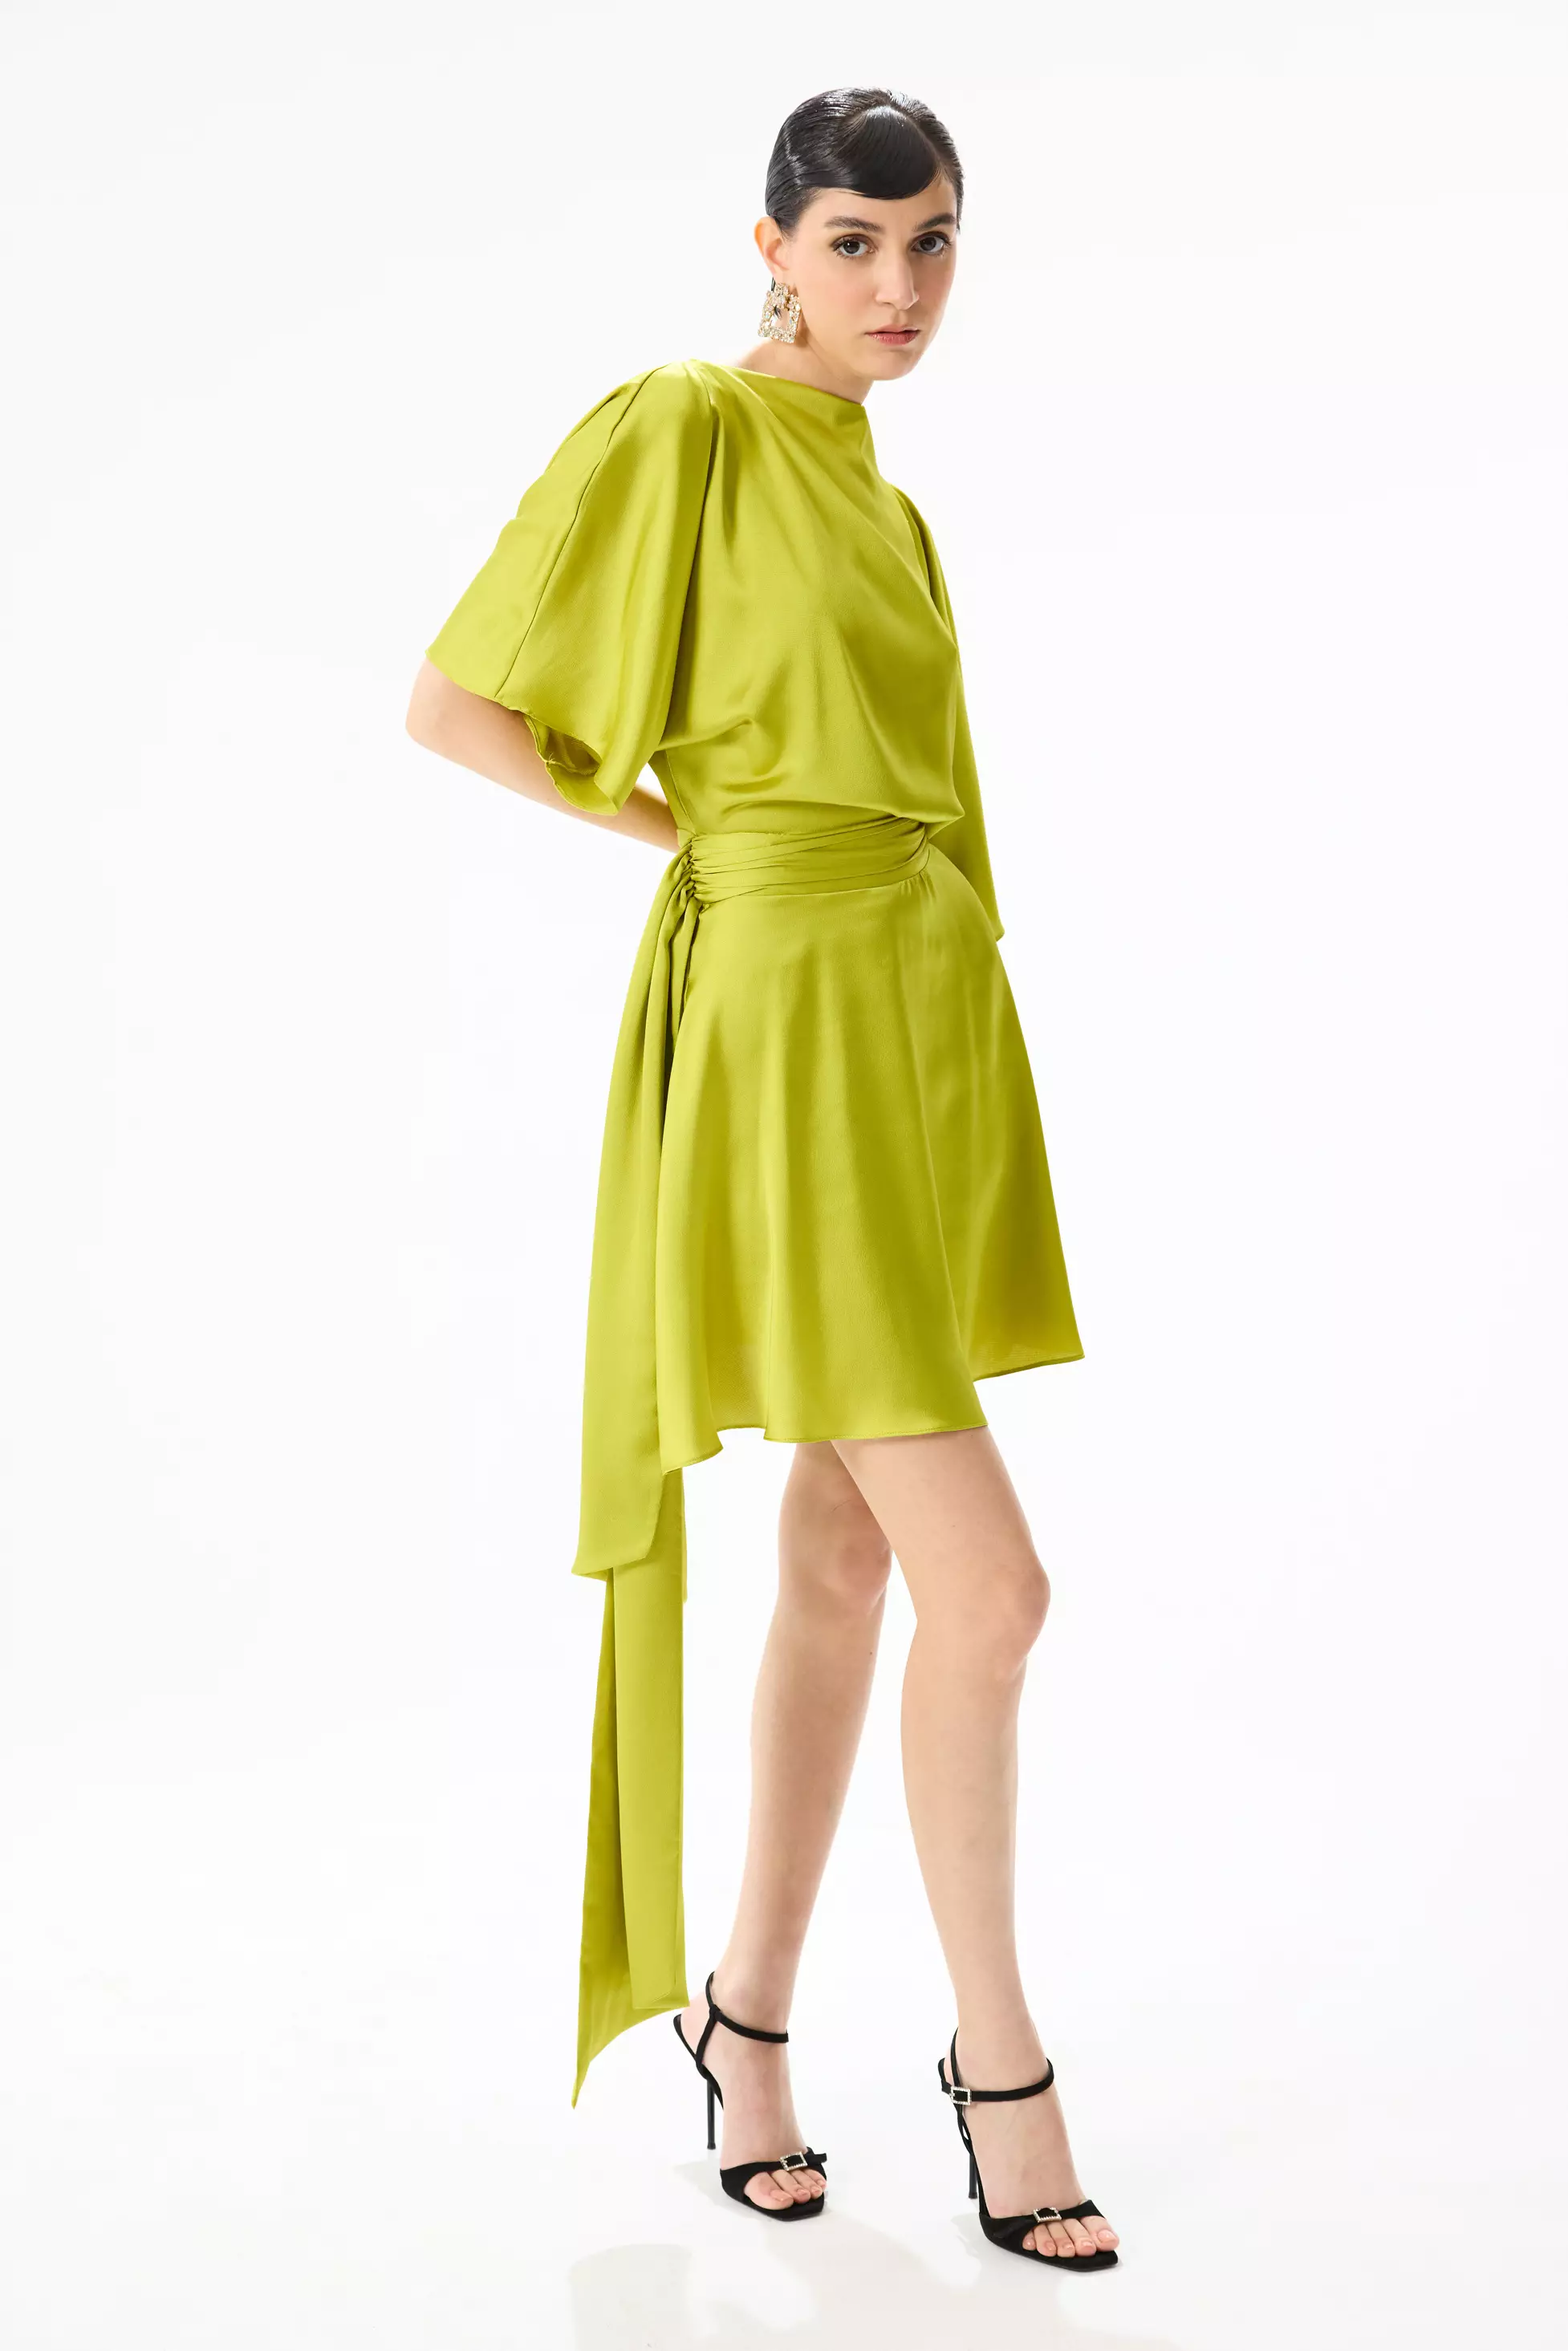 Pistachio green satin short sleeve mini dress